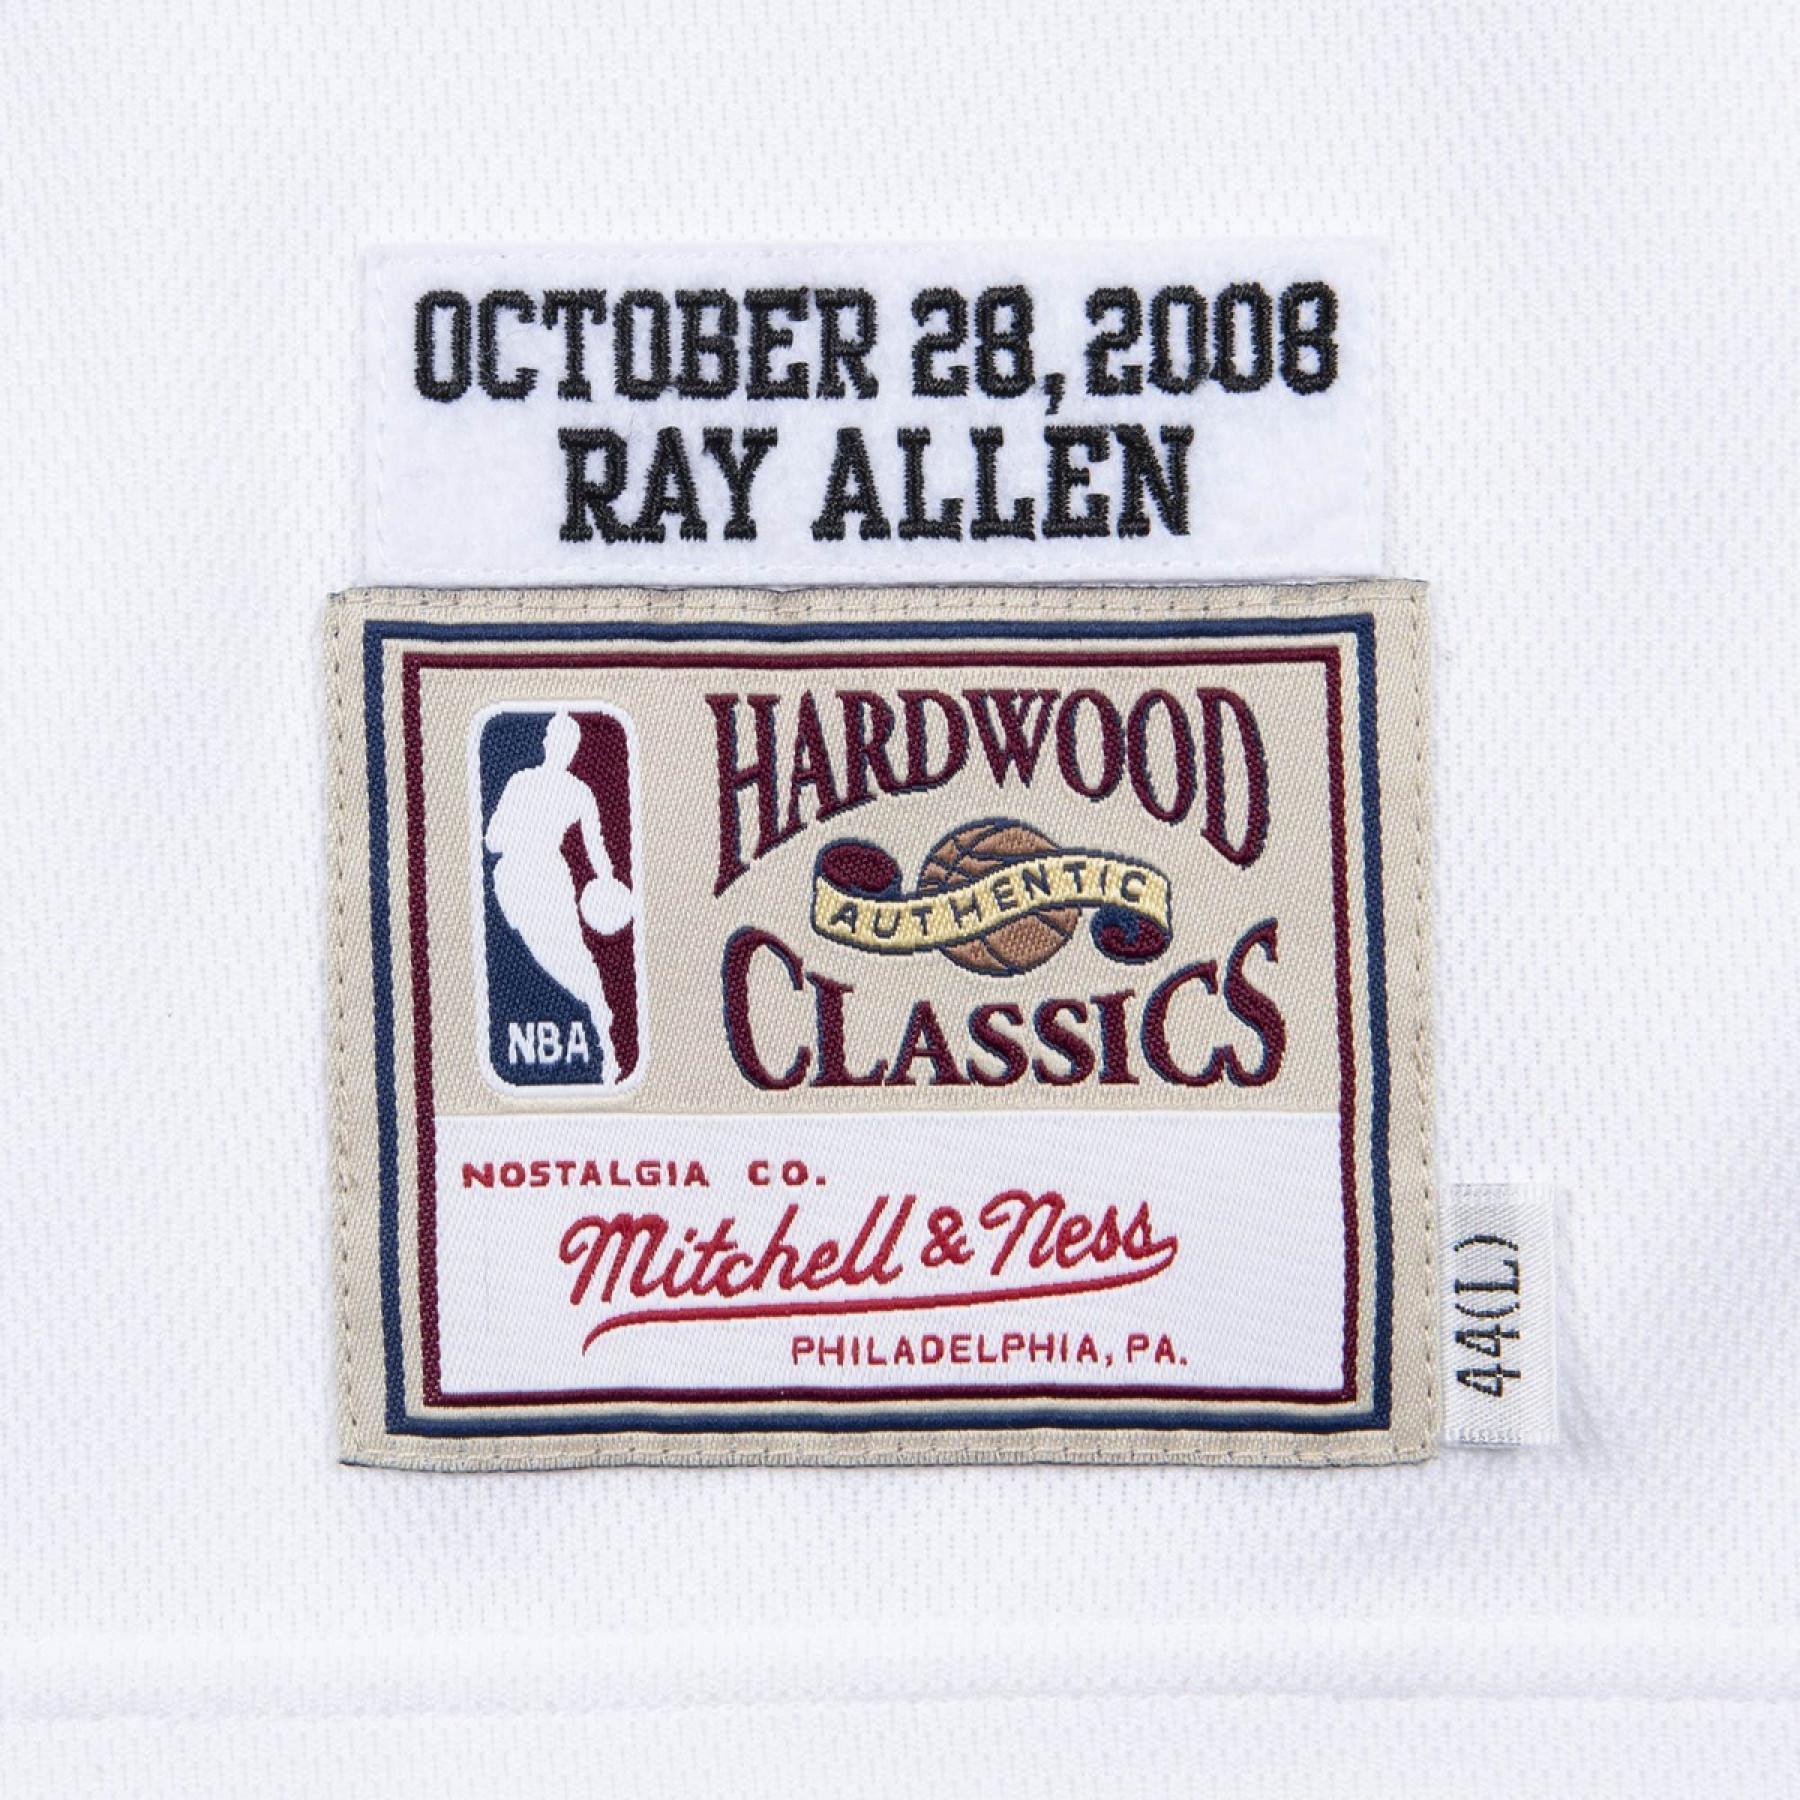 Auténtico jersey Boston Celtics Ray Allen 2008/09